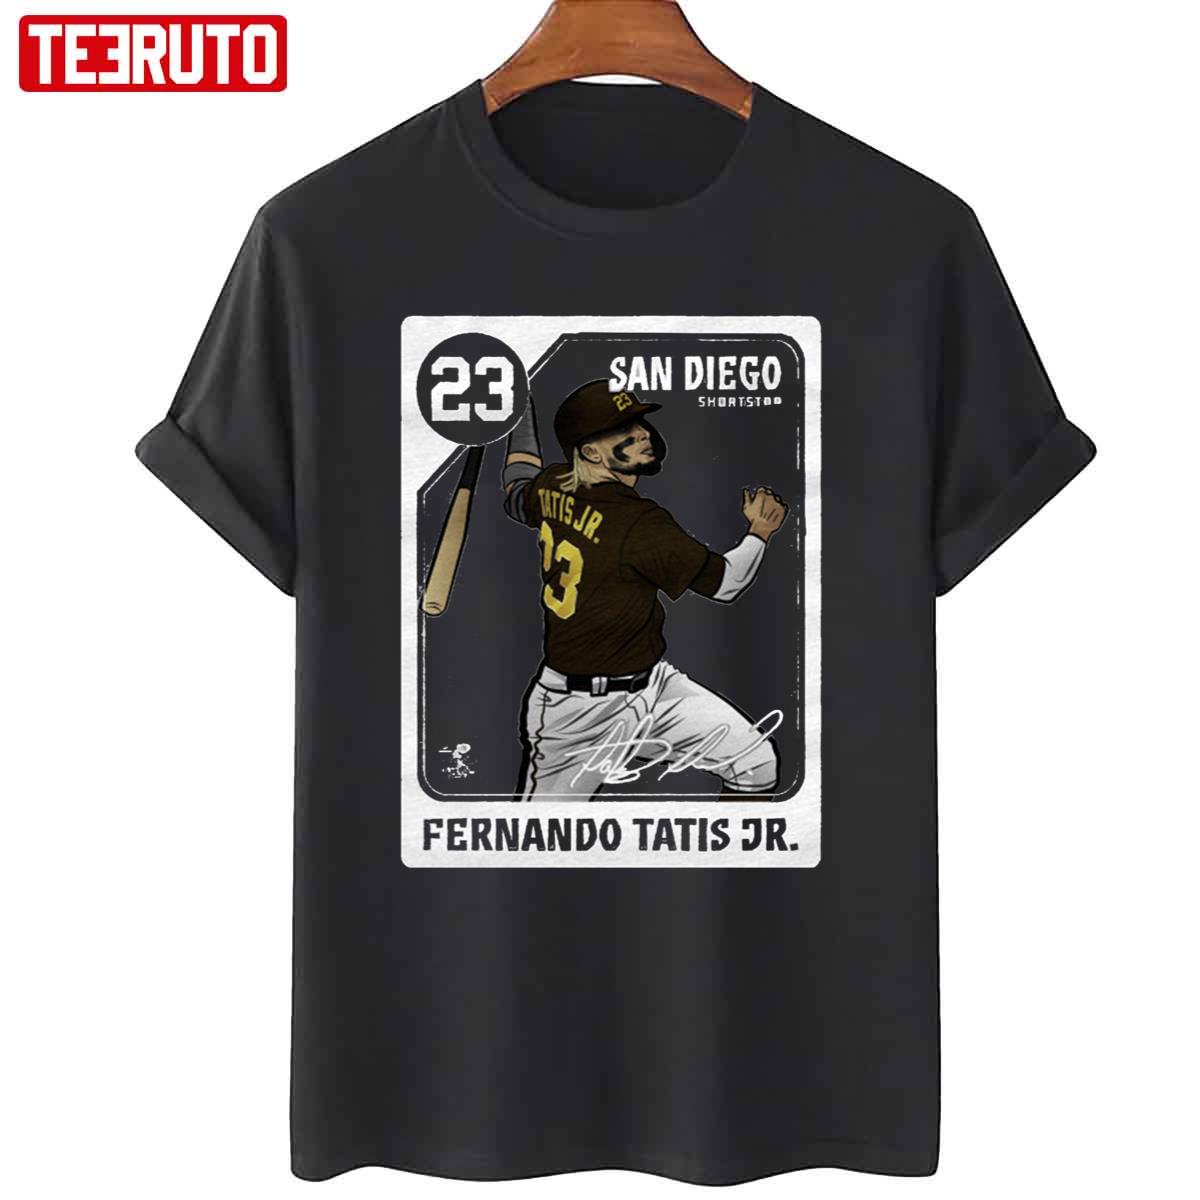 Fernando Tatis Jr. Card Unisex T-Shirt